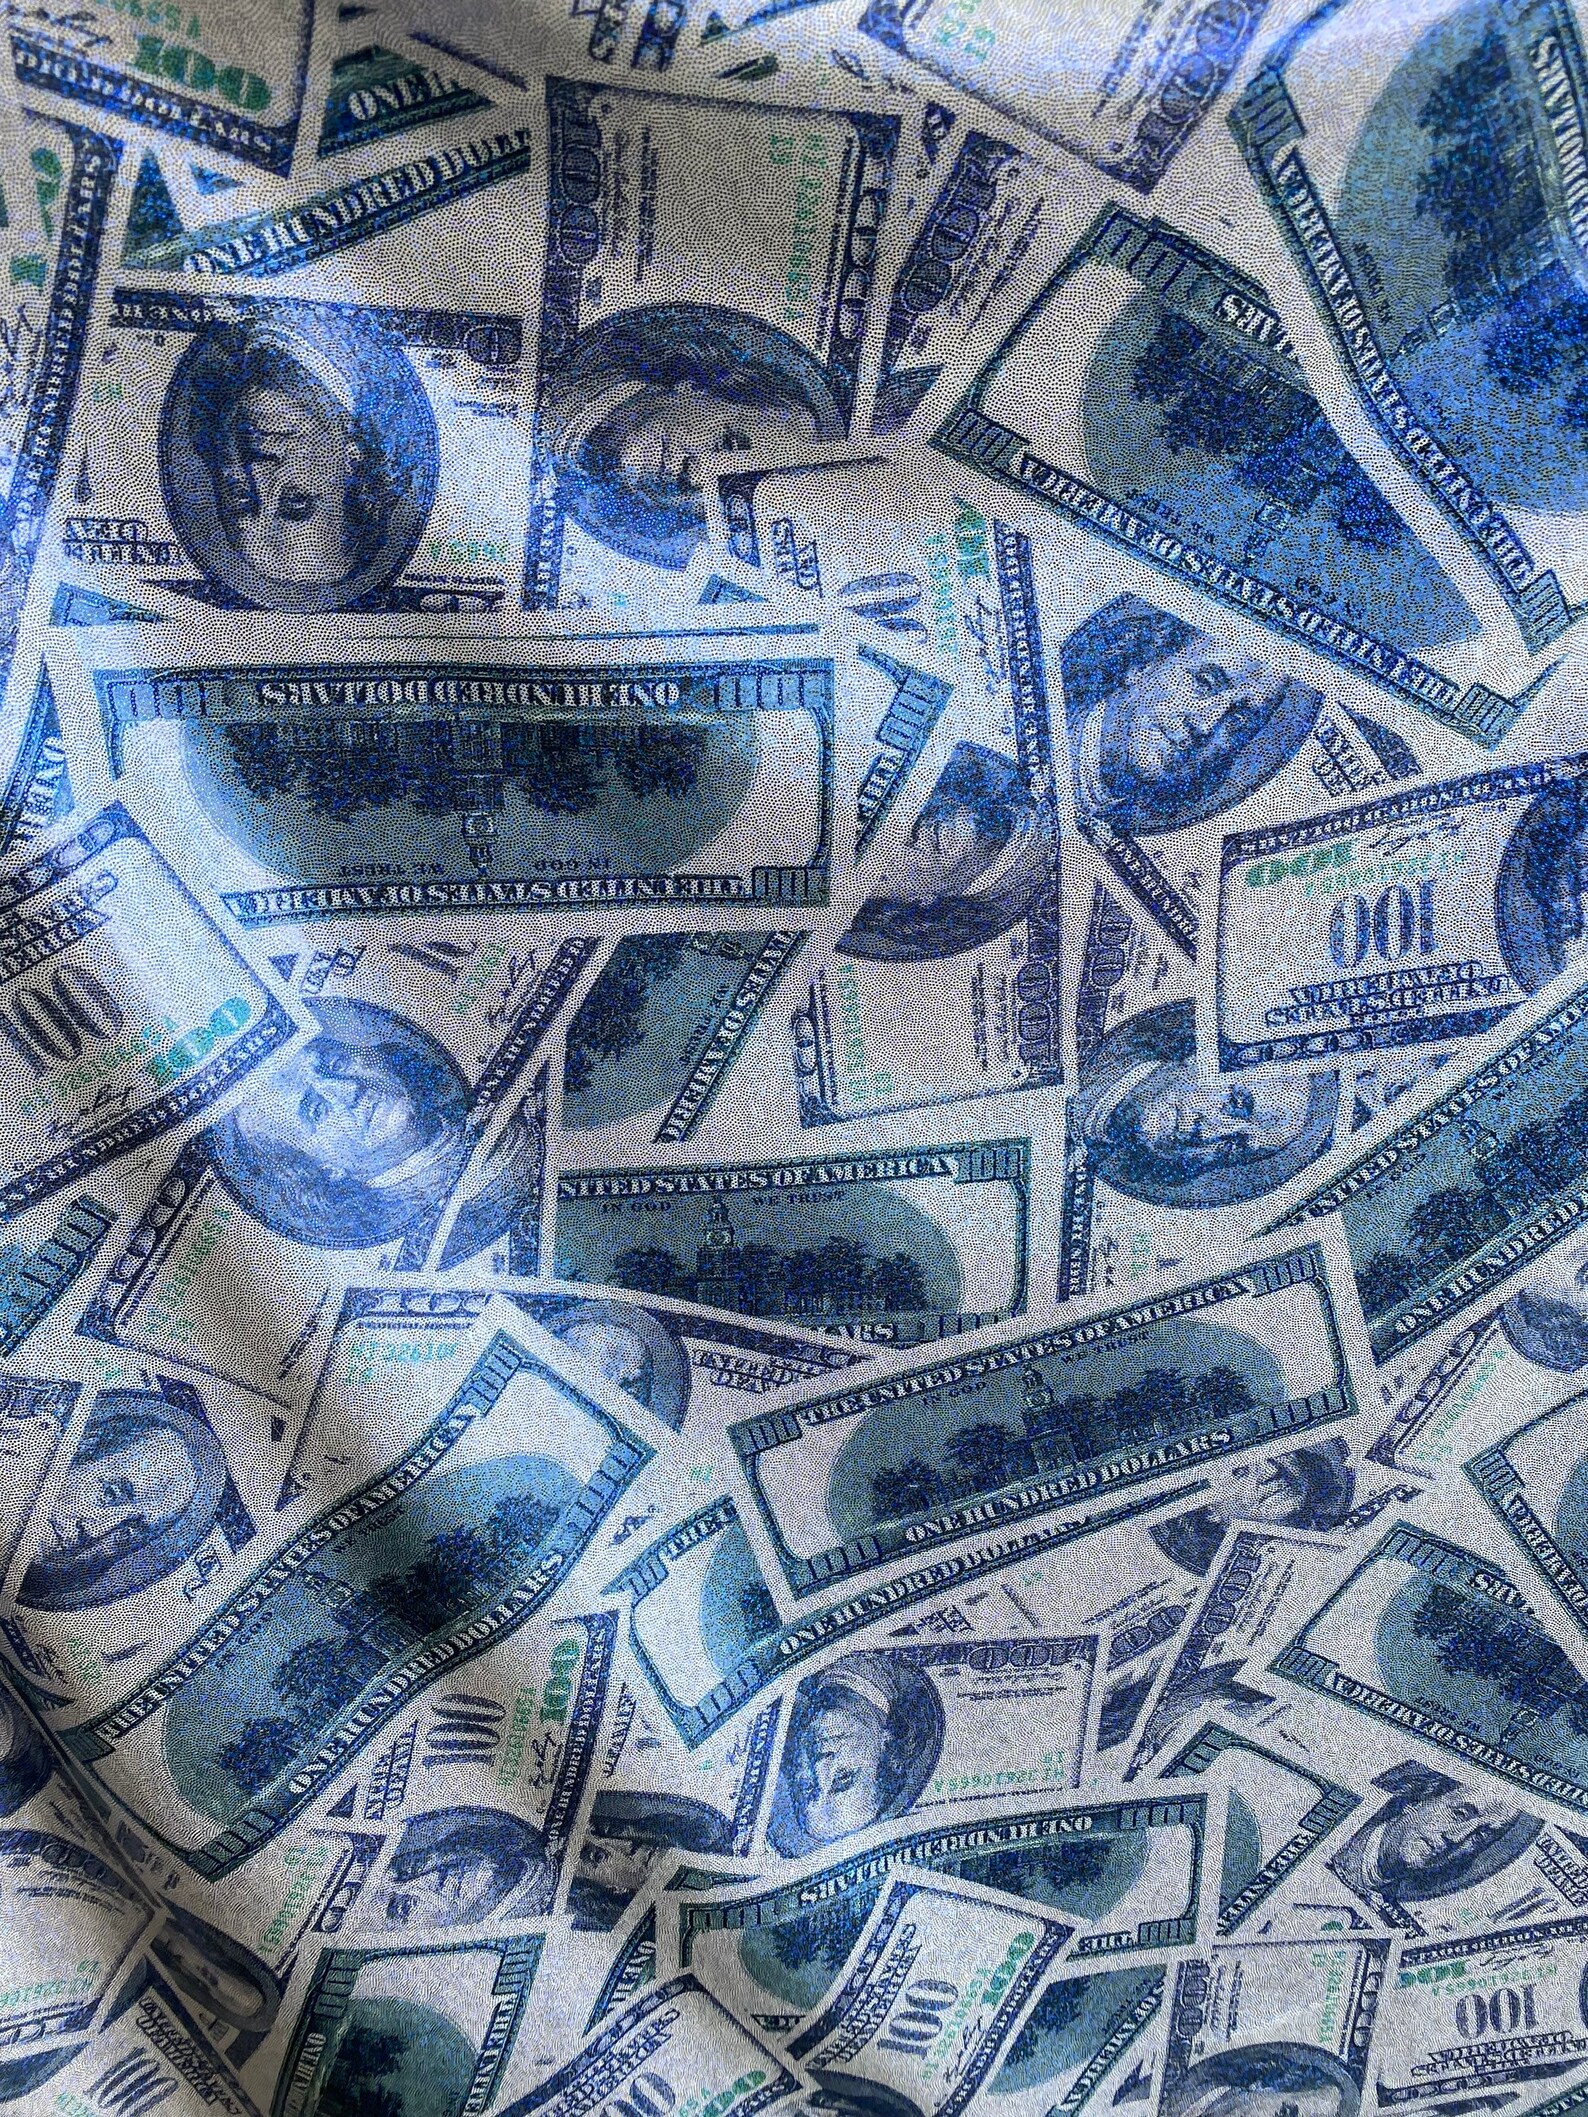 New metallic modern money design hologram 100 dollar bill | Etsy